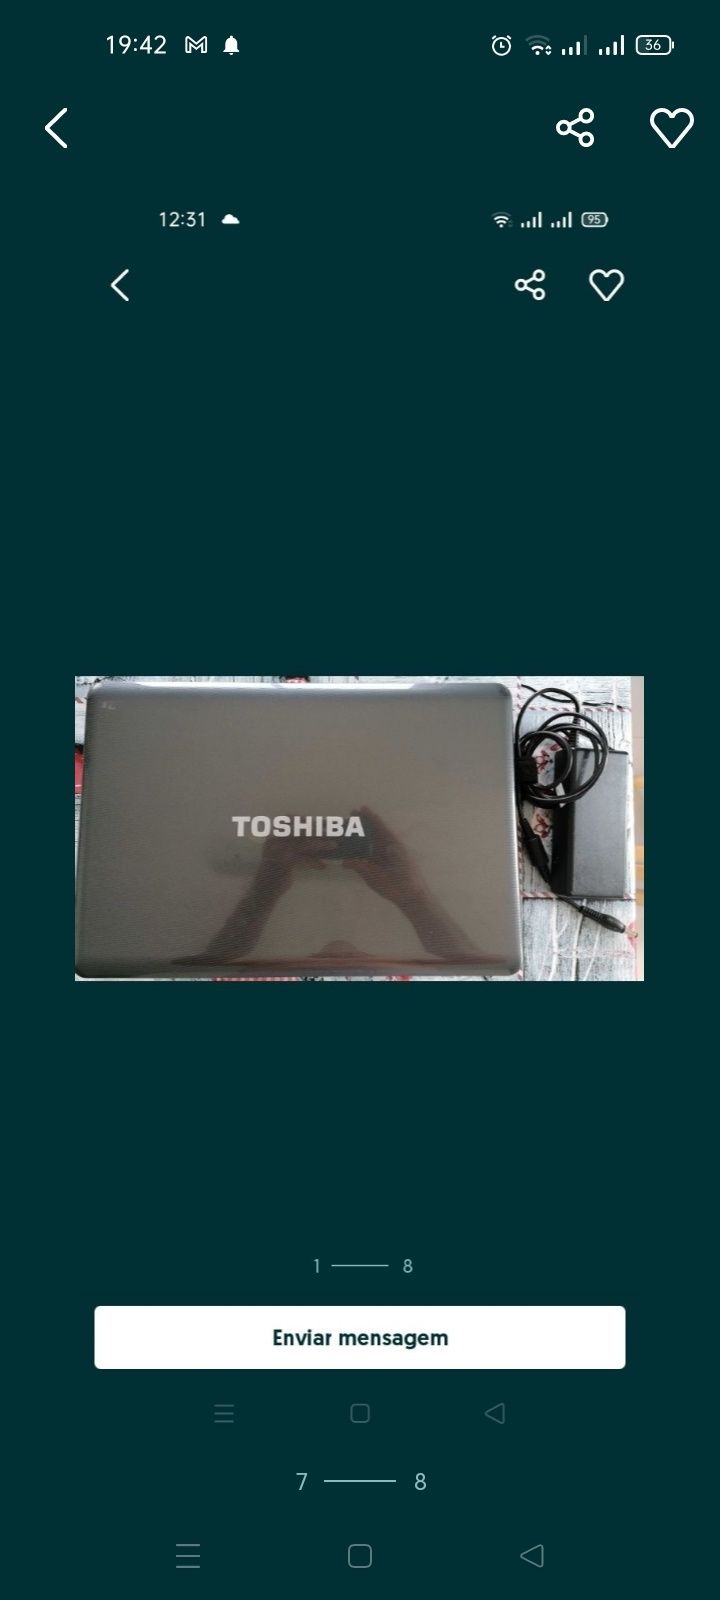 Portátil Toshiba L500 PRO 4gb de RAM HDD 550gb Windows 10